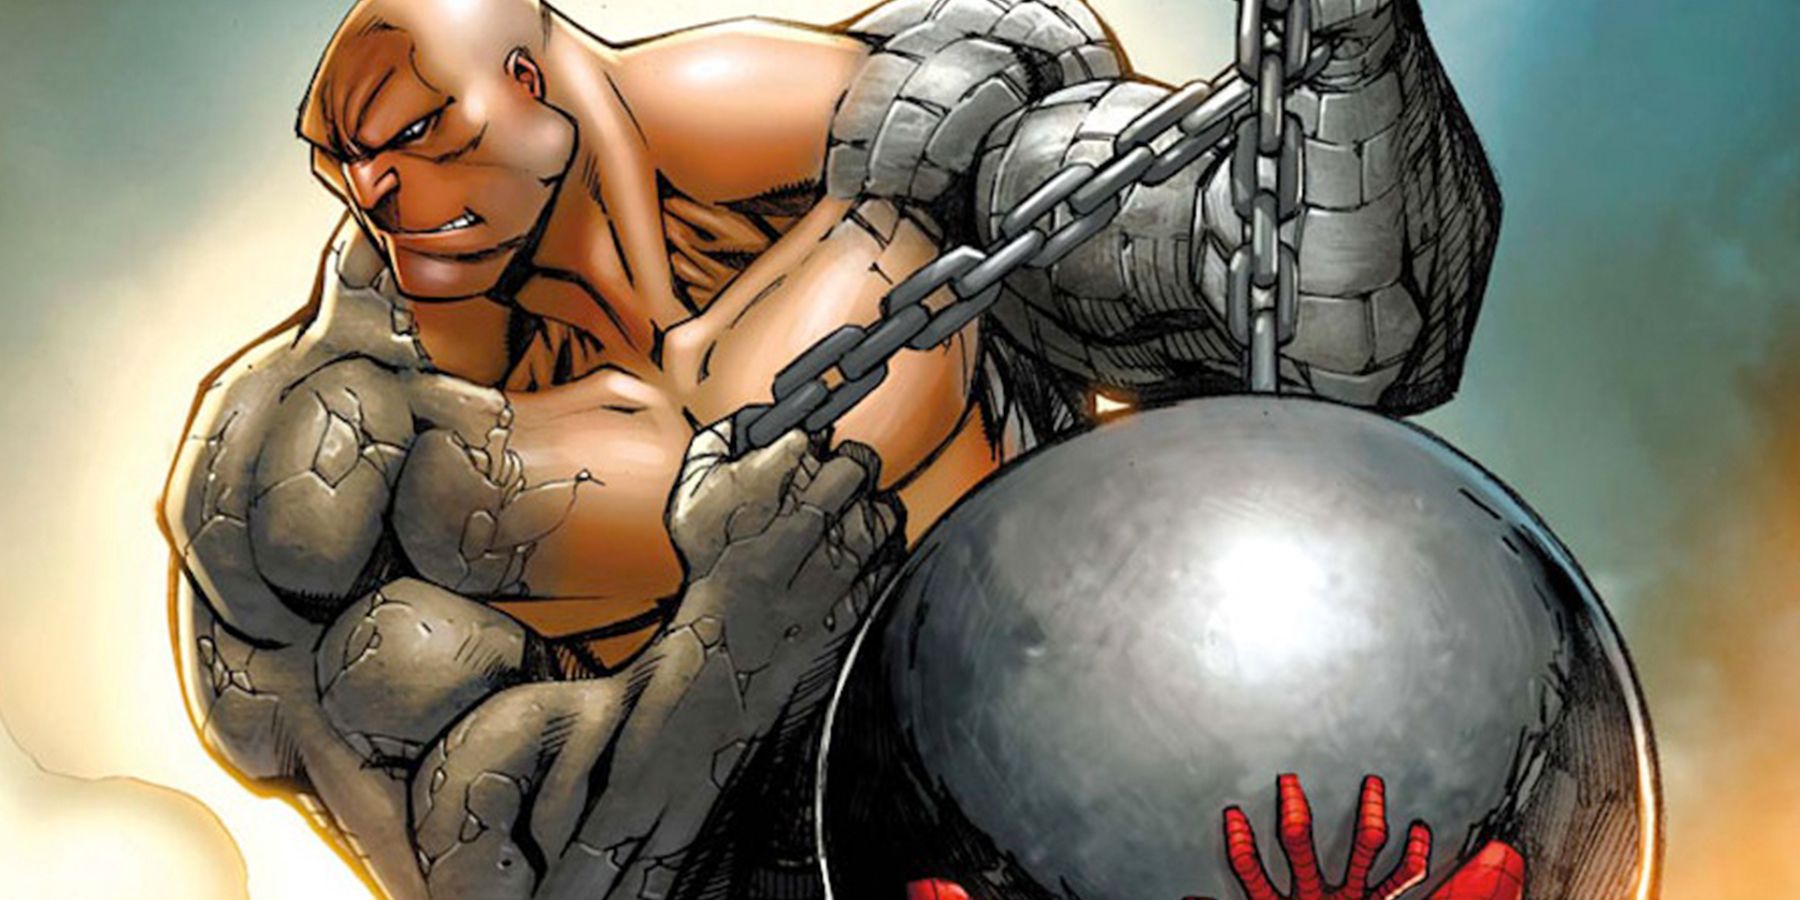 Absorbing Man wielding his wrecking ball in Marvel comics